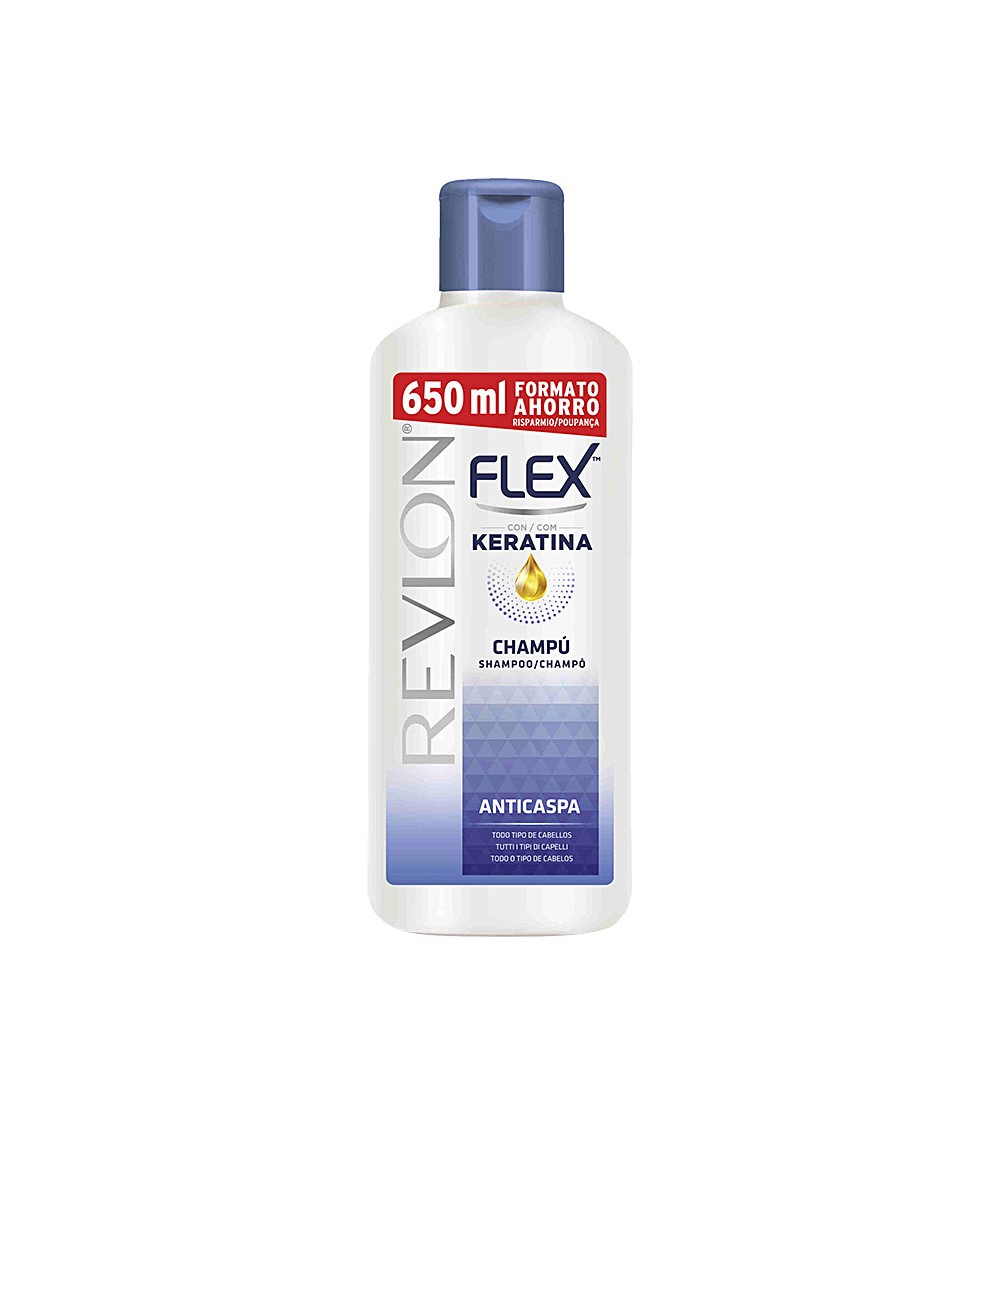 FLEX  Shampoing Kératine anti-dandruff 650 ml